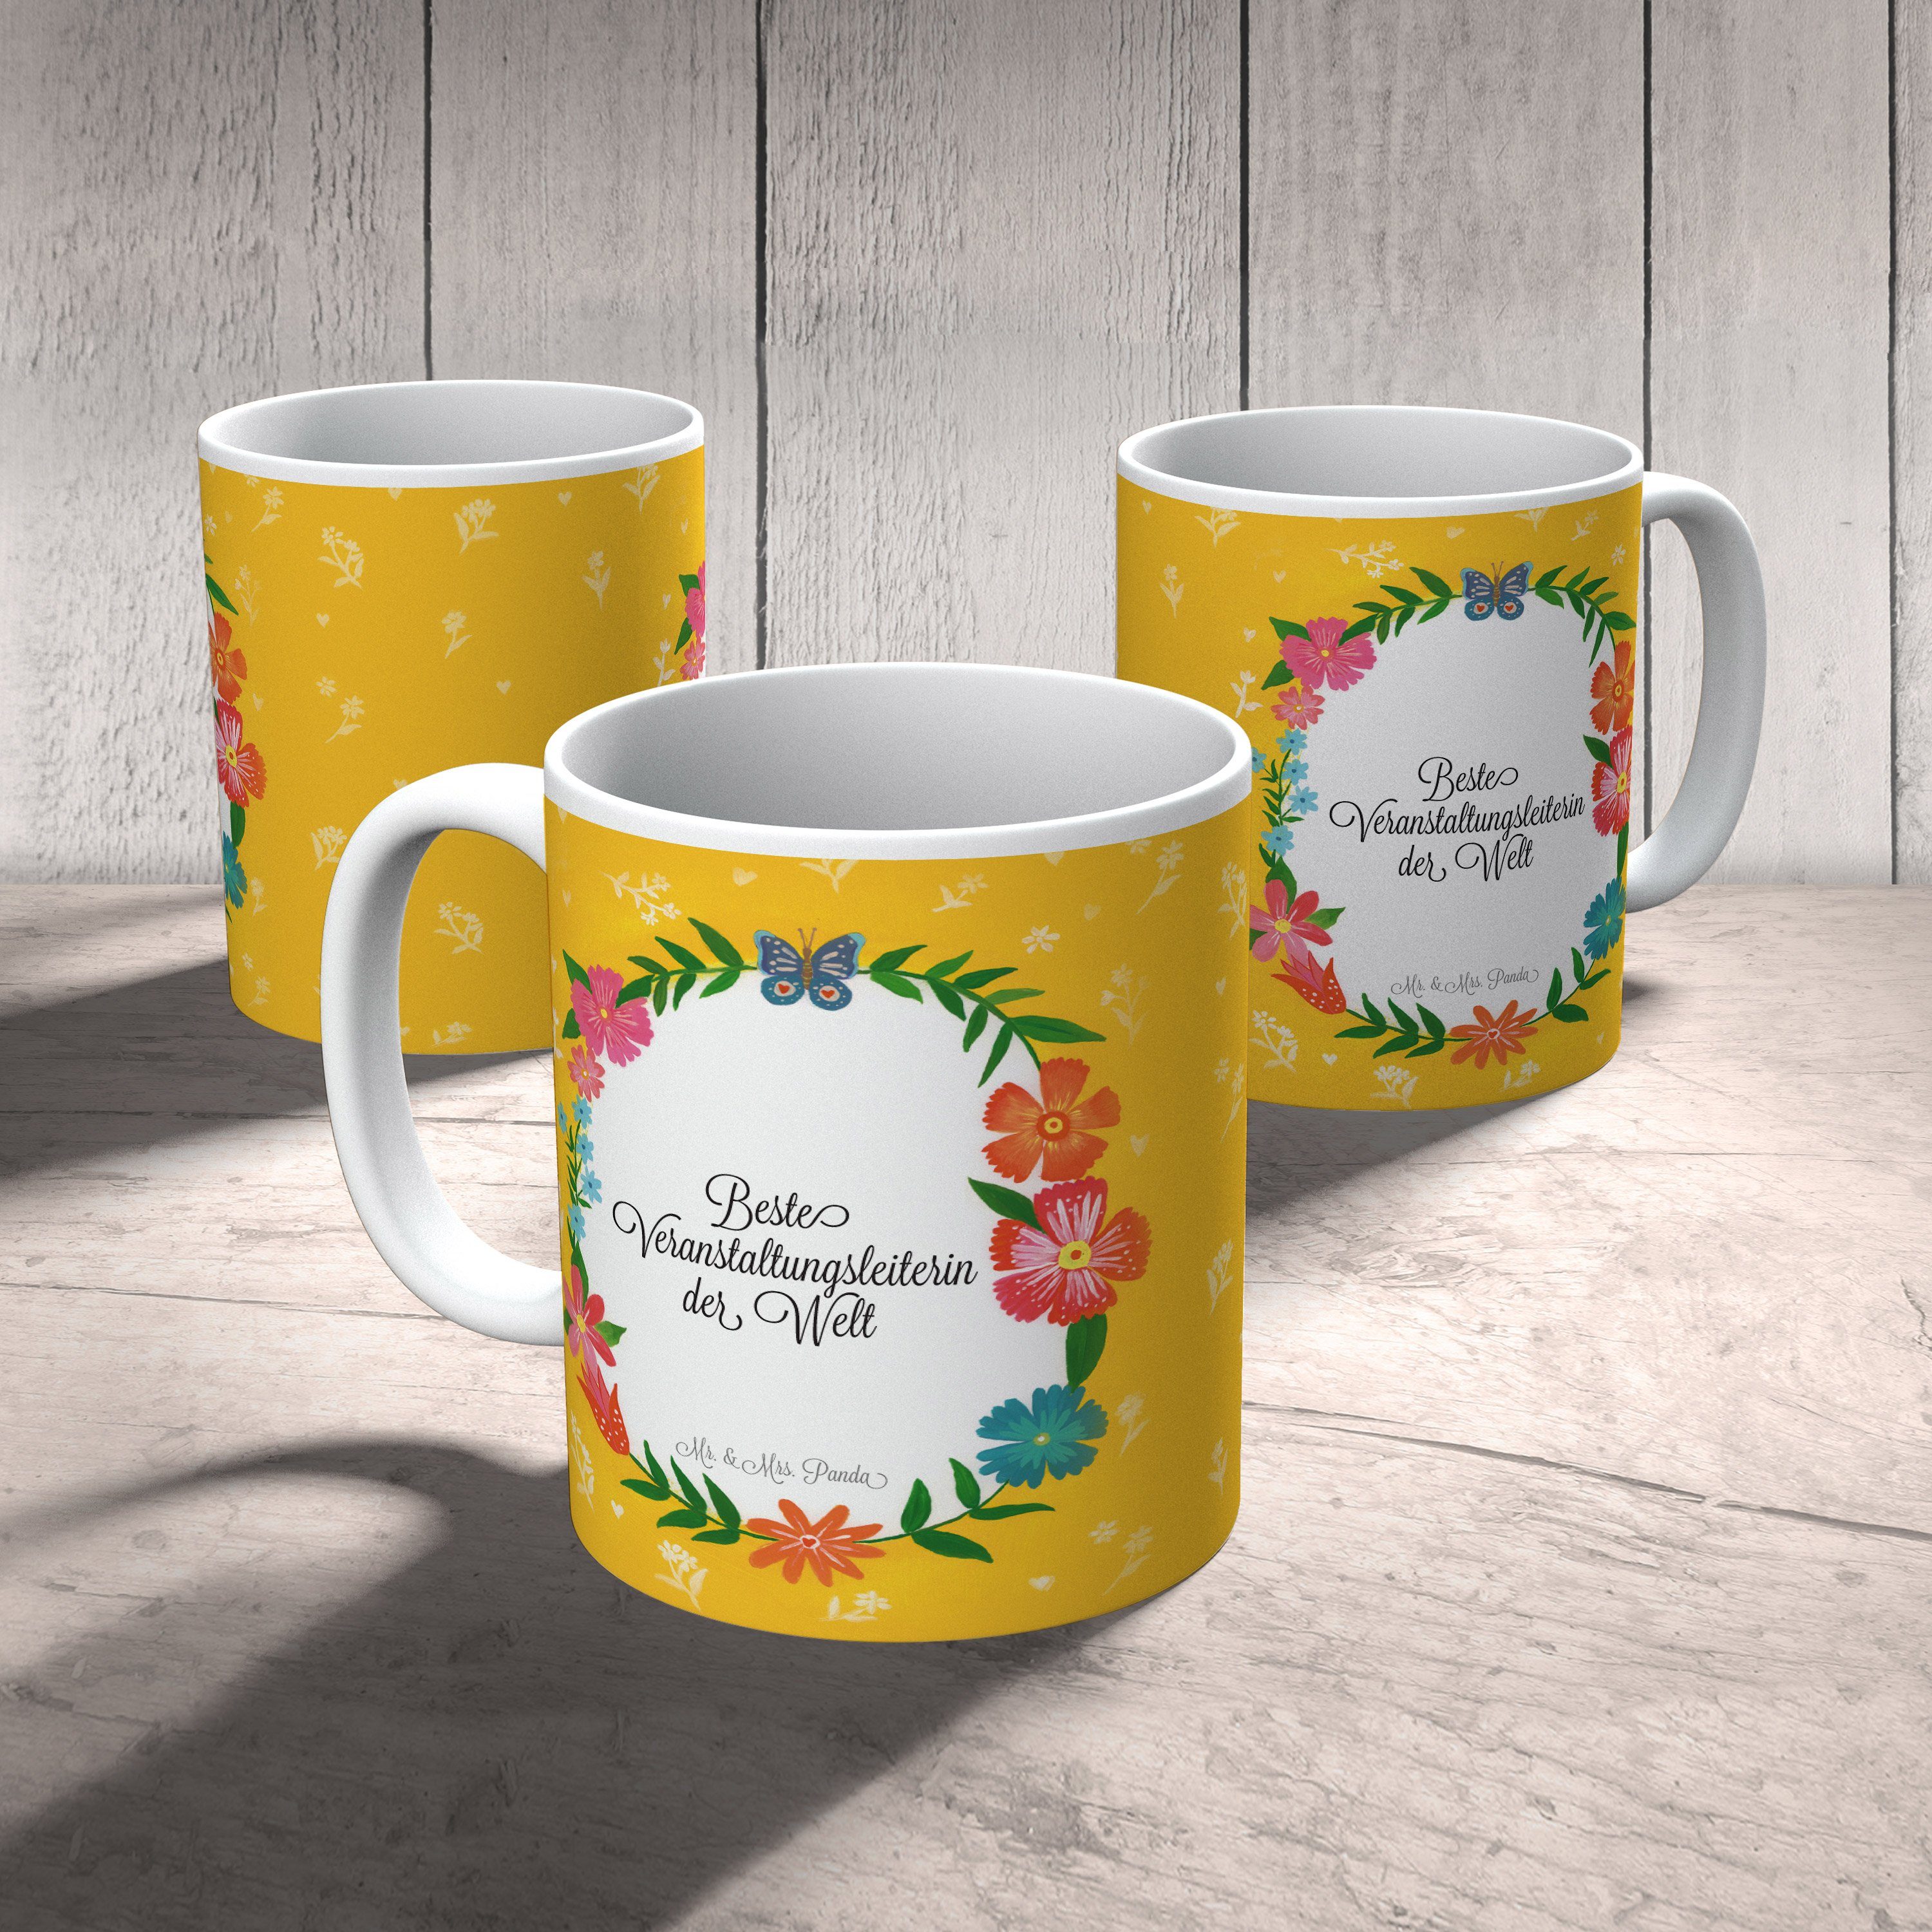 Keramik Geschenk, Kaffeetasse, Panda Mr. Mrs. Tasse Abschluss, & Veranstaltungsleiterin Teetasse, -